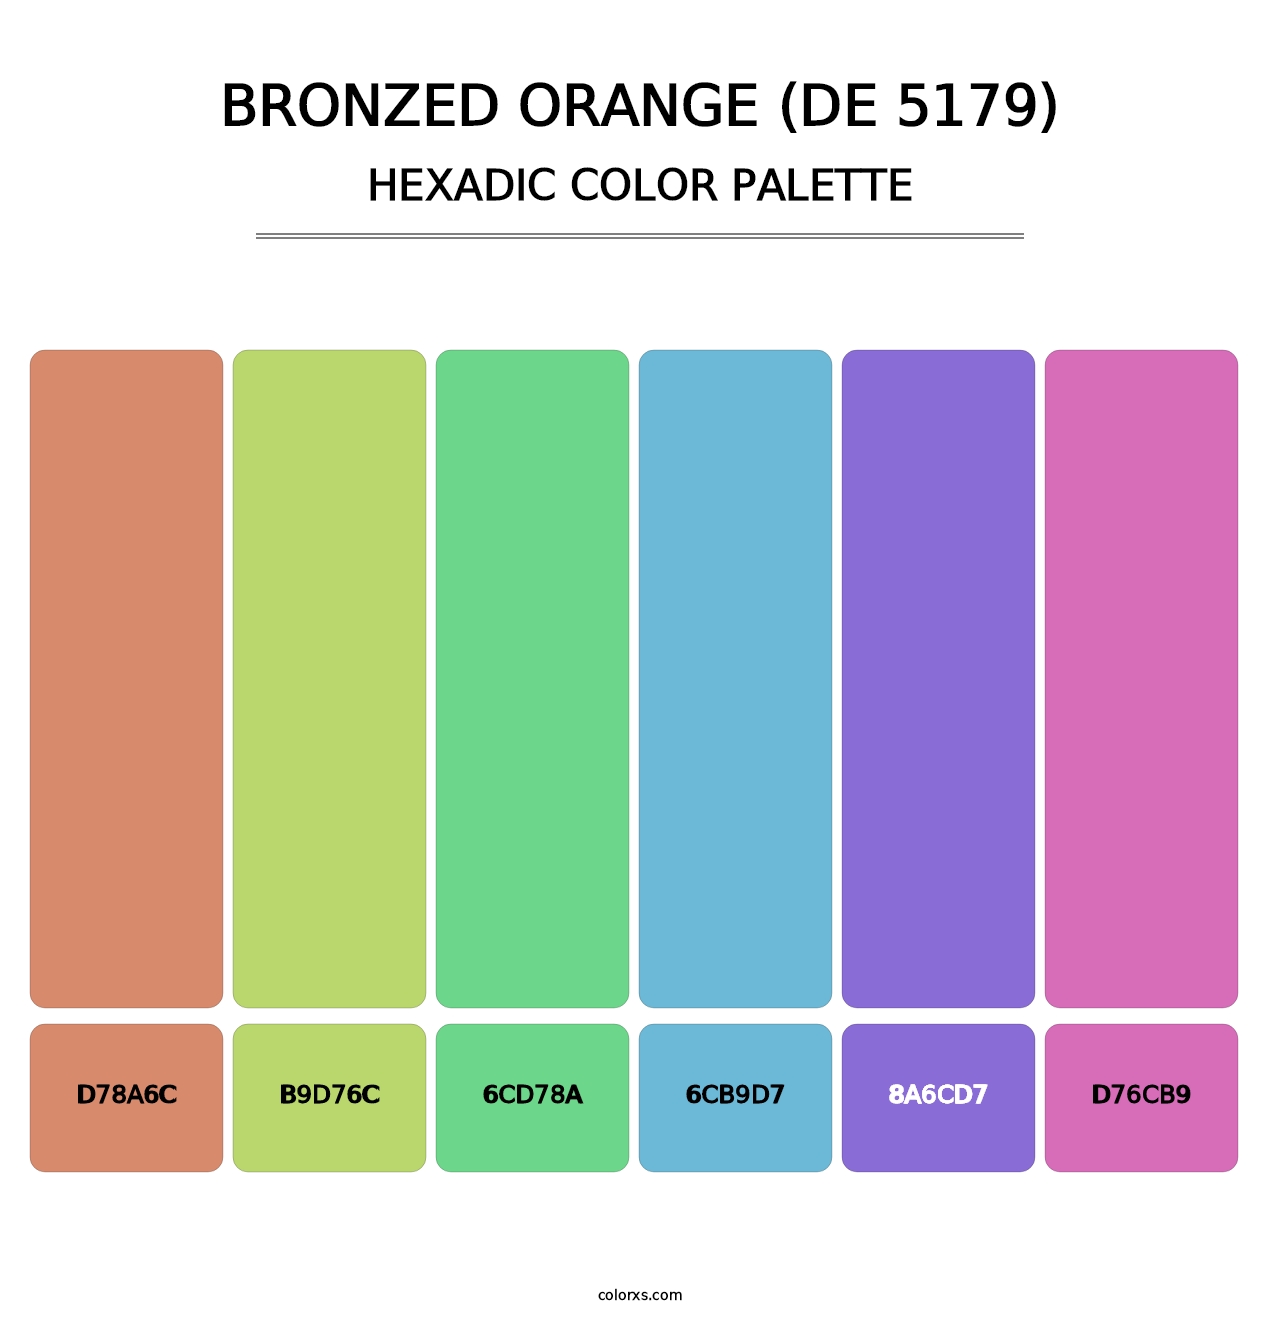 Bronzed Orange (DE 5179) - Hexadic Color Palette